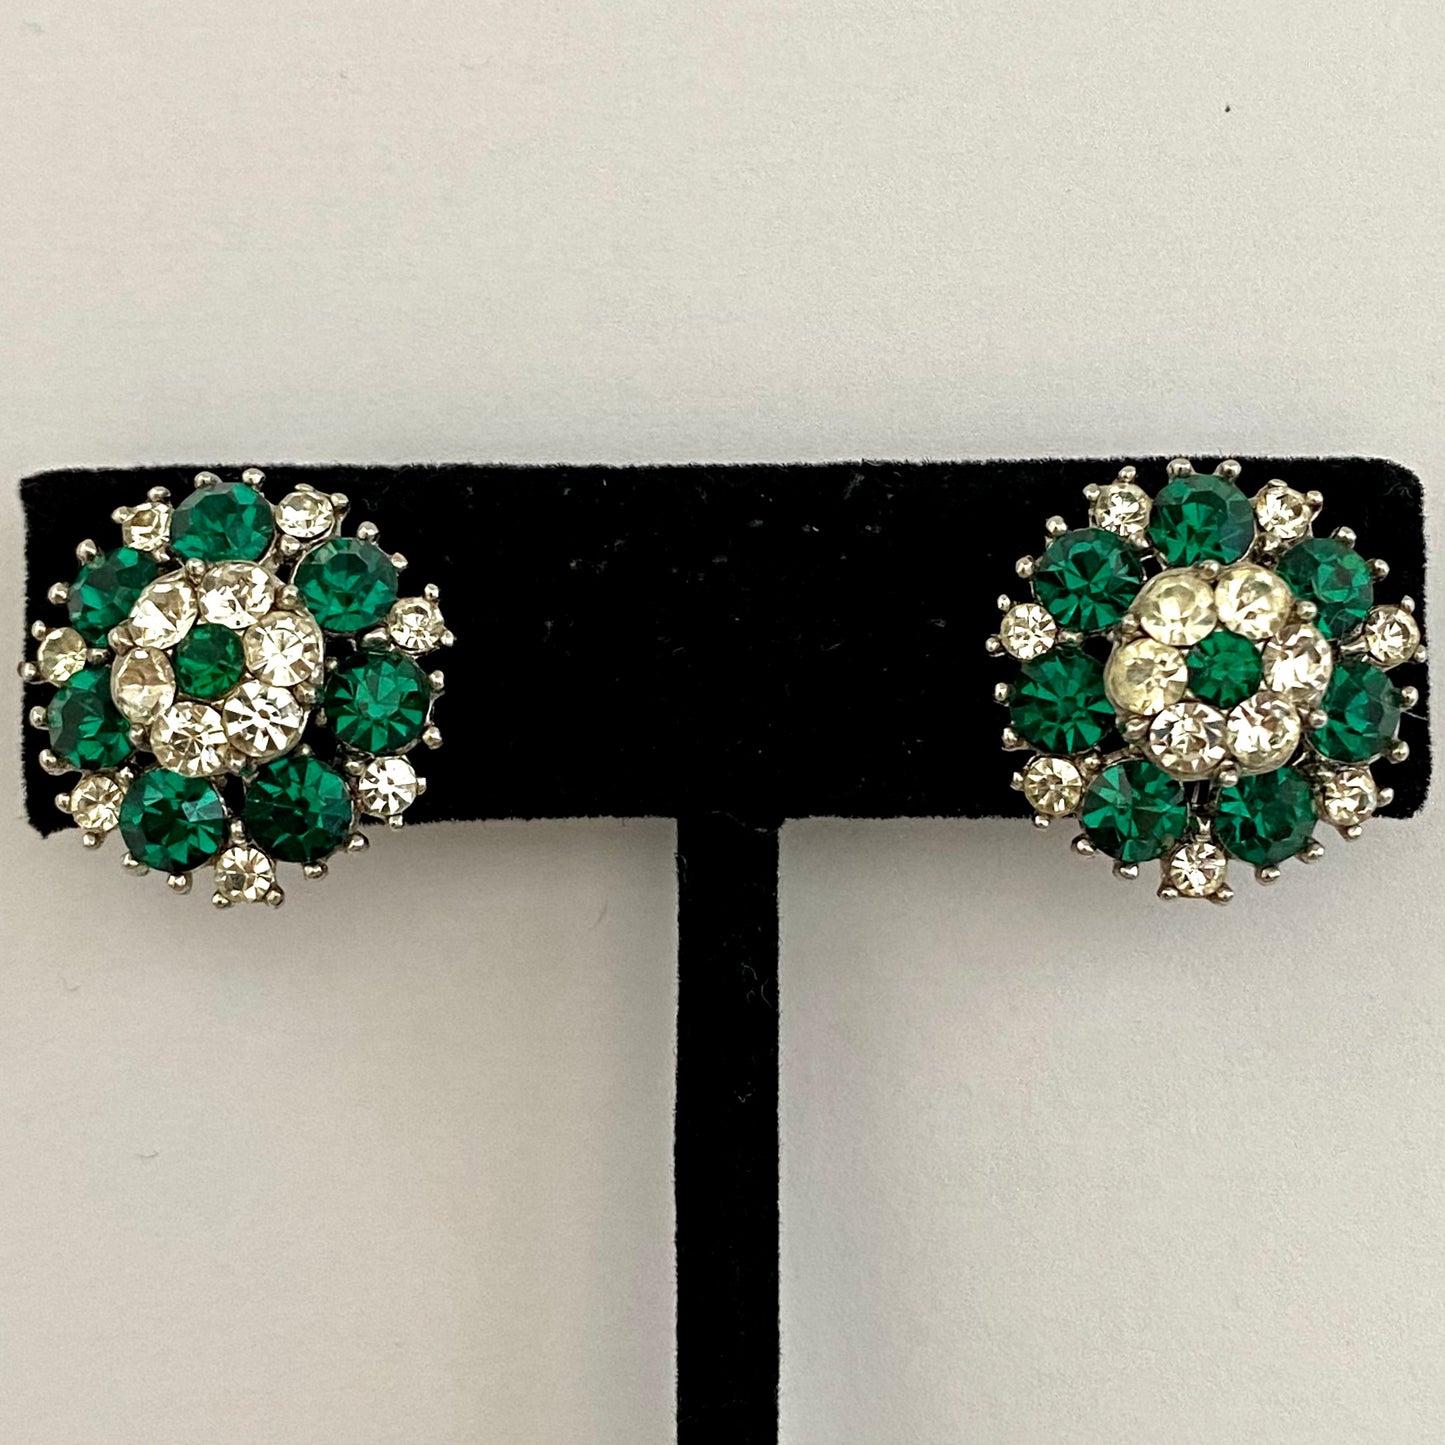 1960s Crown Trifari Rhinestone Earrings